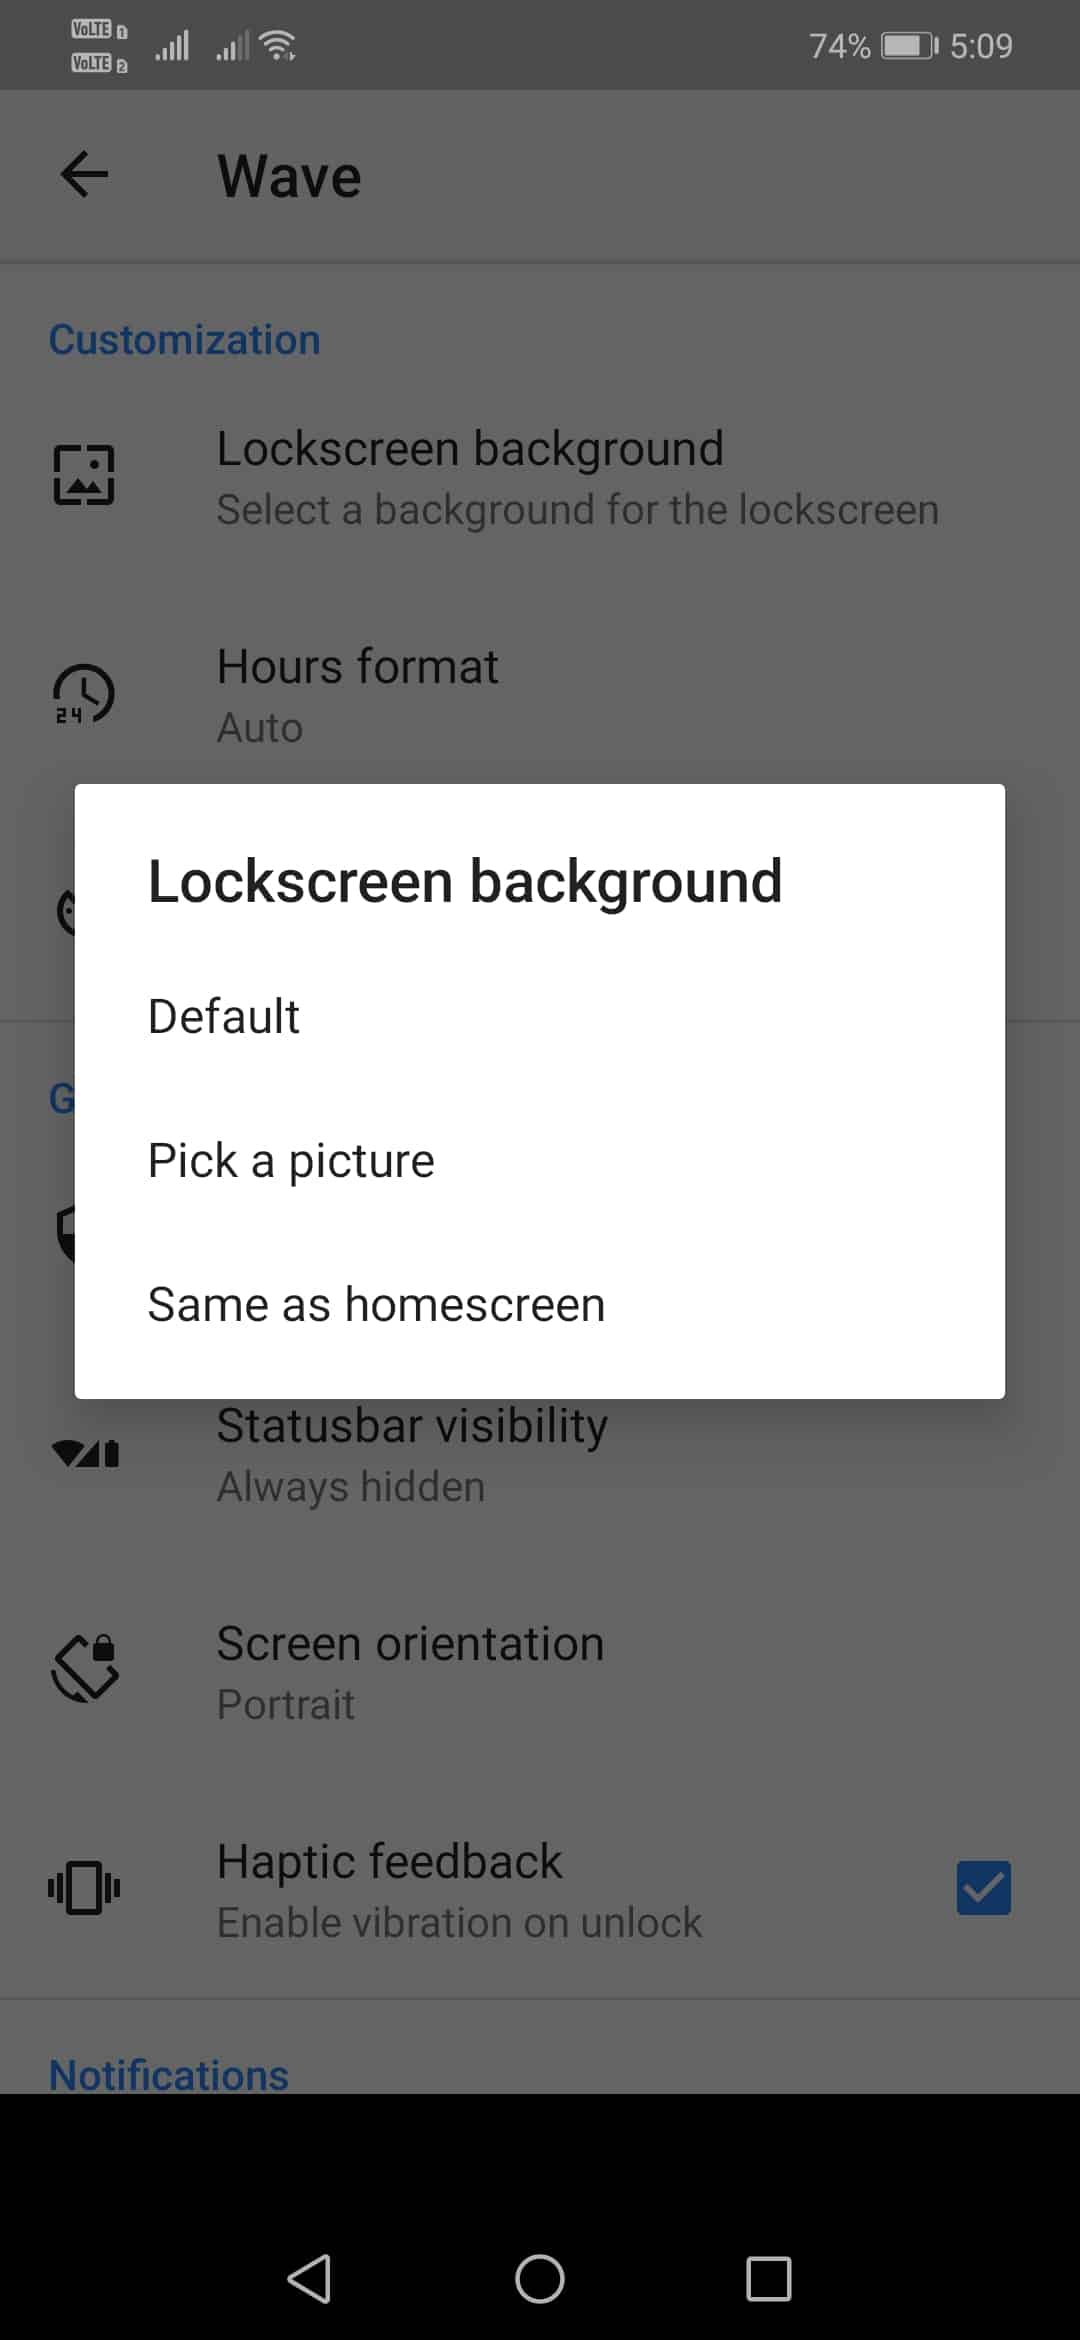 Using Wave - Customizable Lock screen